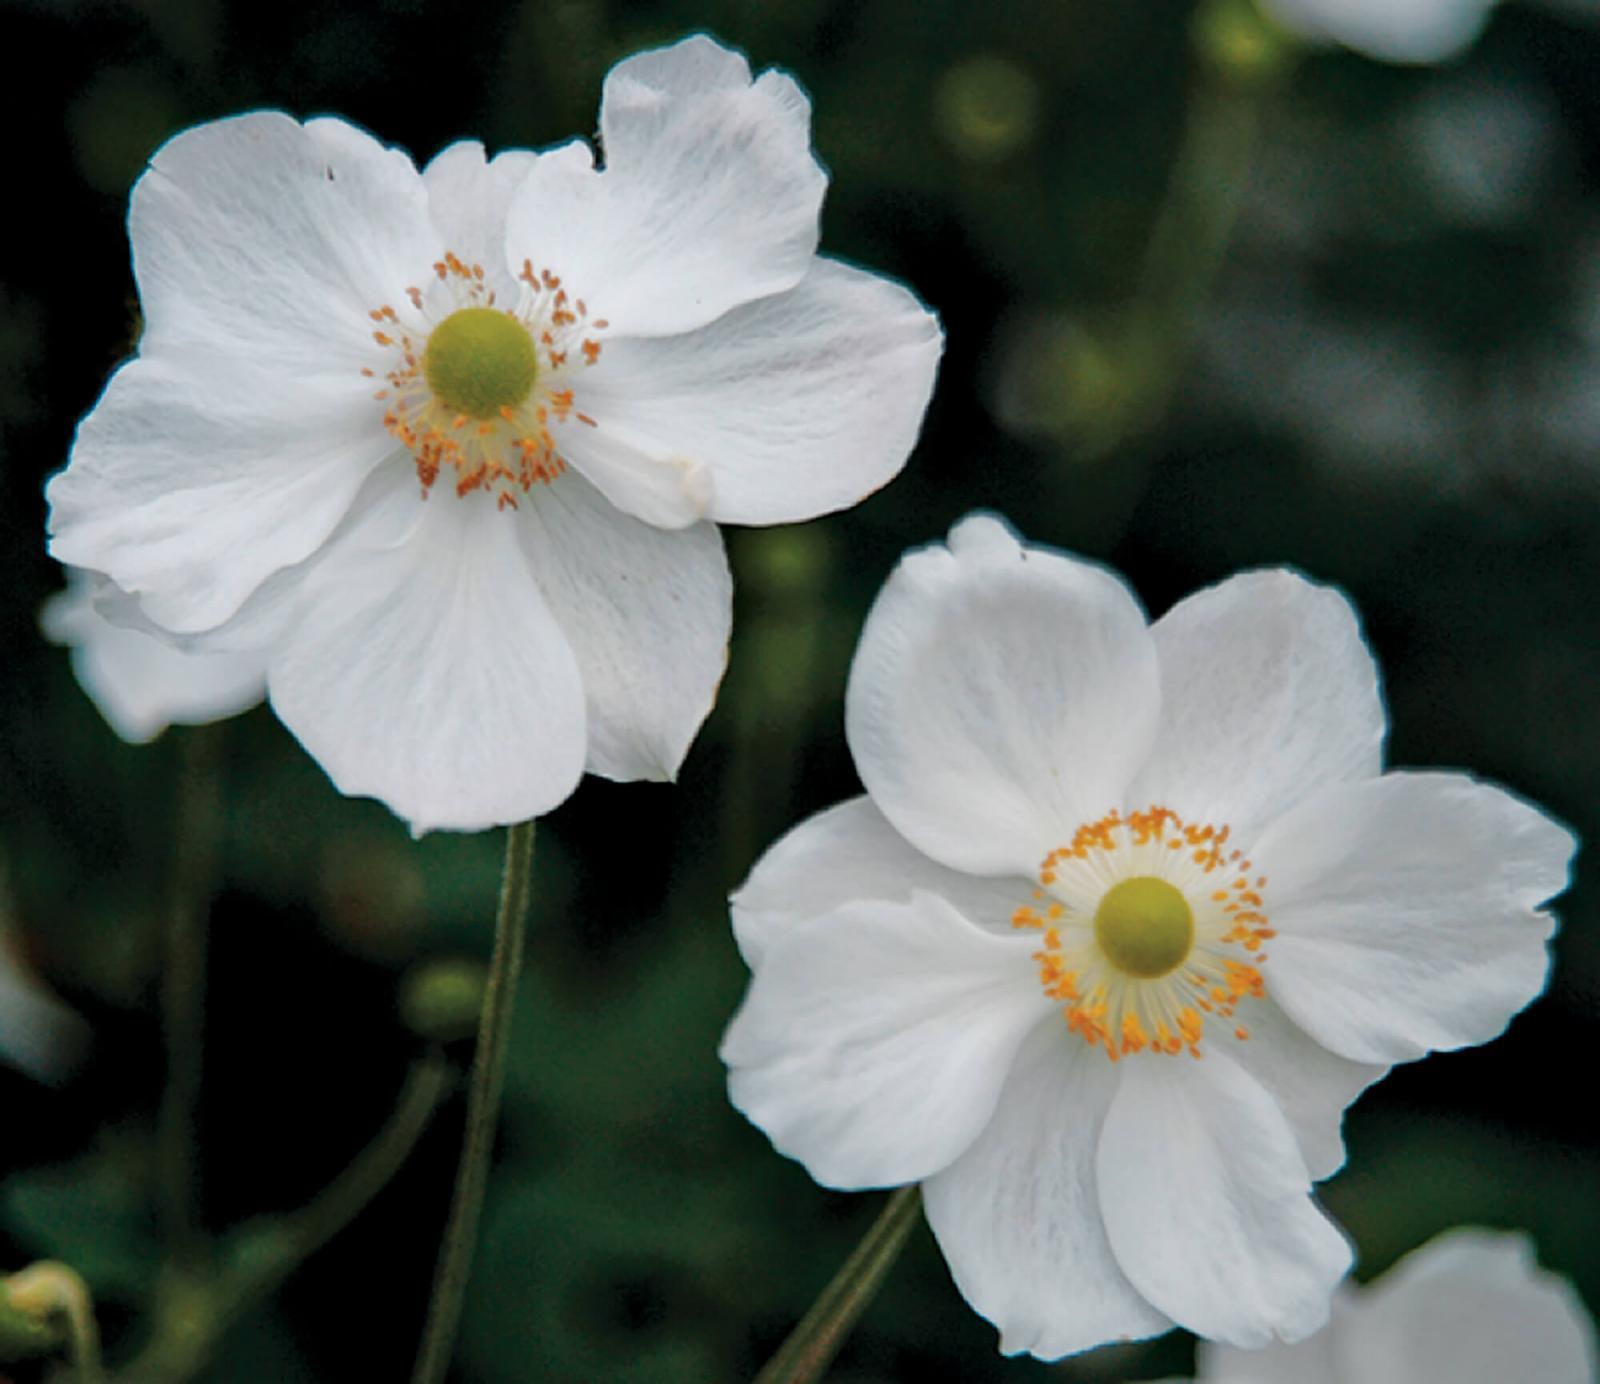 Anemone ‘Honorine Jobert’ has been chosen the  perennial plant of the year.